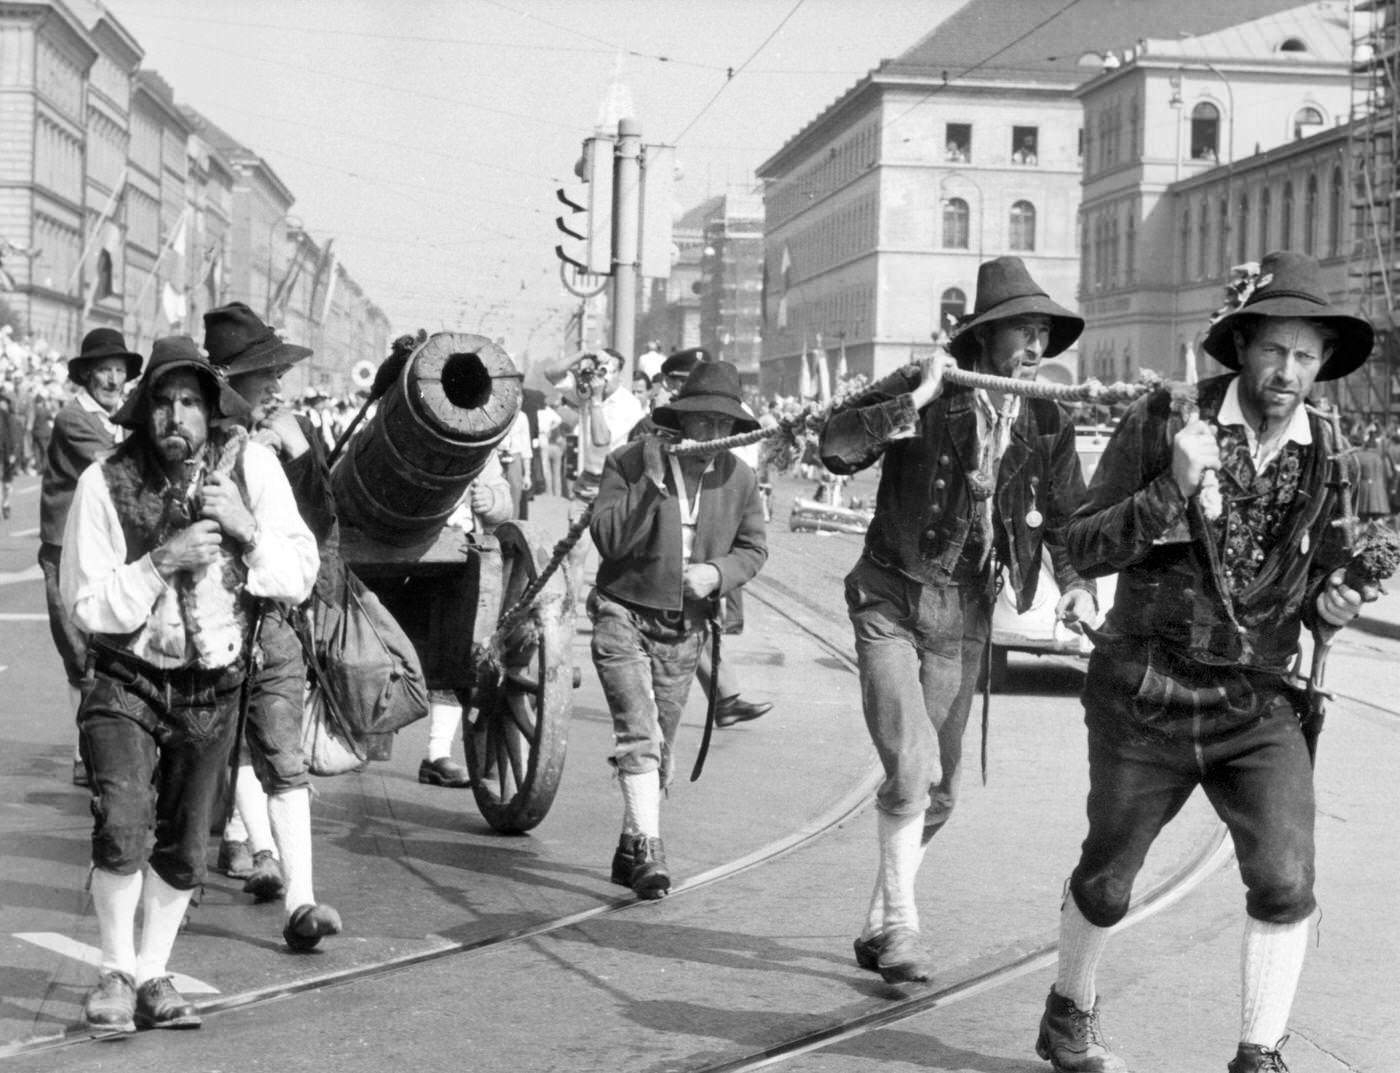 Austrian group in Munich Oktoberfest parade, 1961.